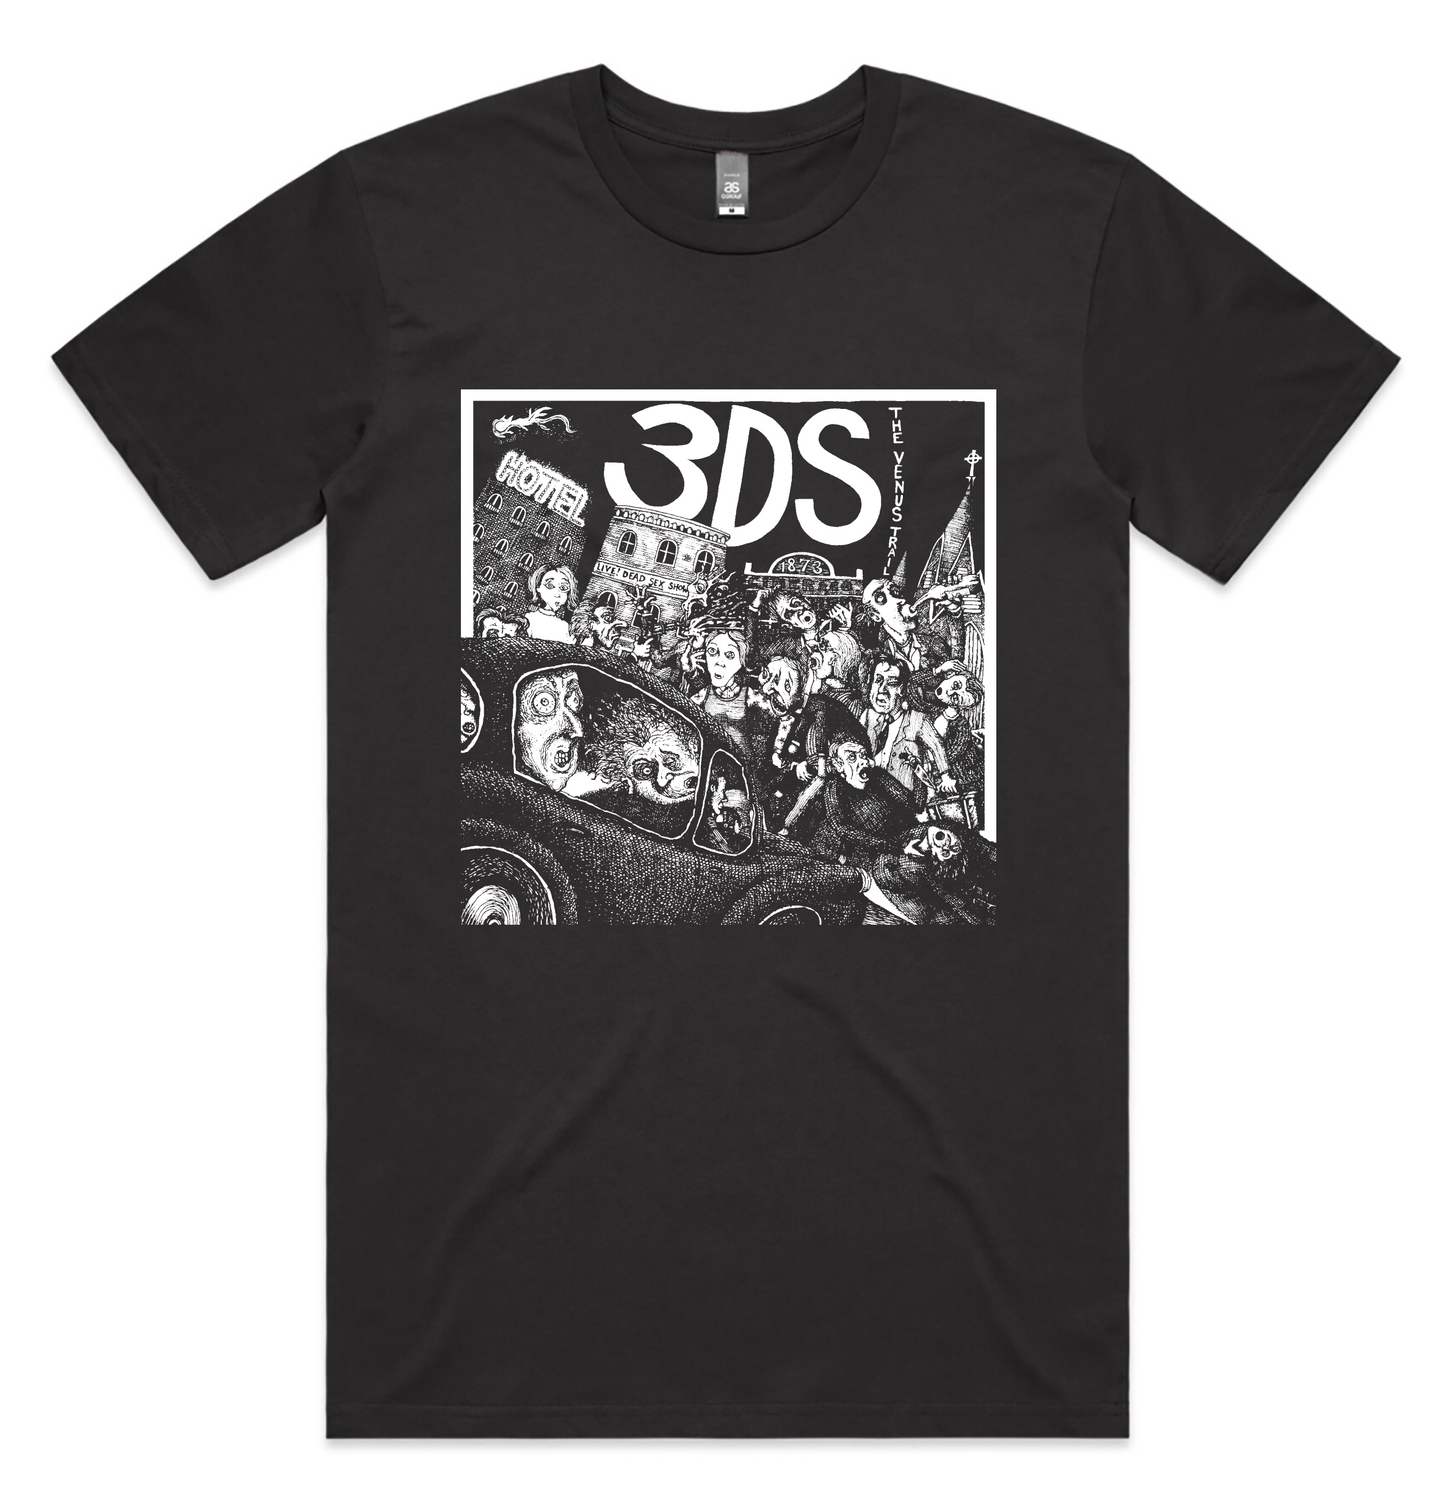 3Ds - The Venus Trail T-Shirt (Coal)